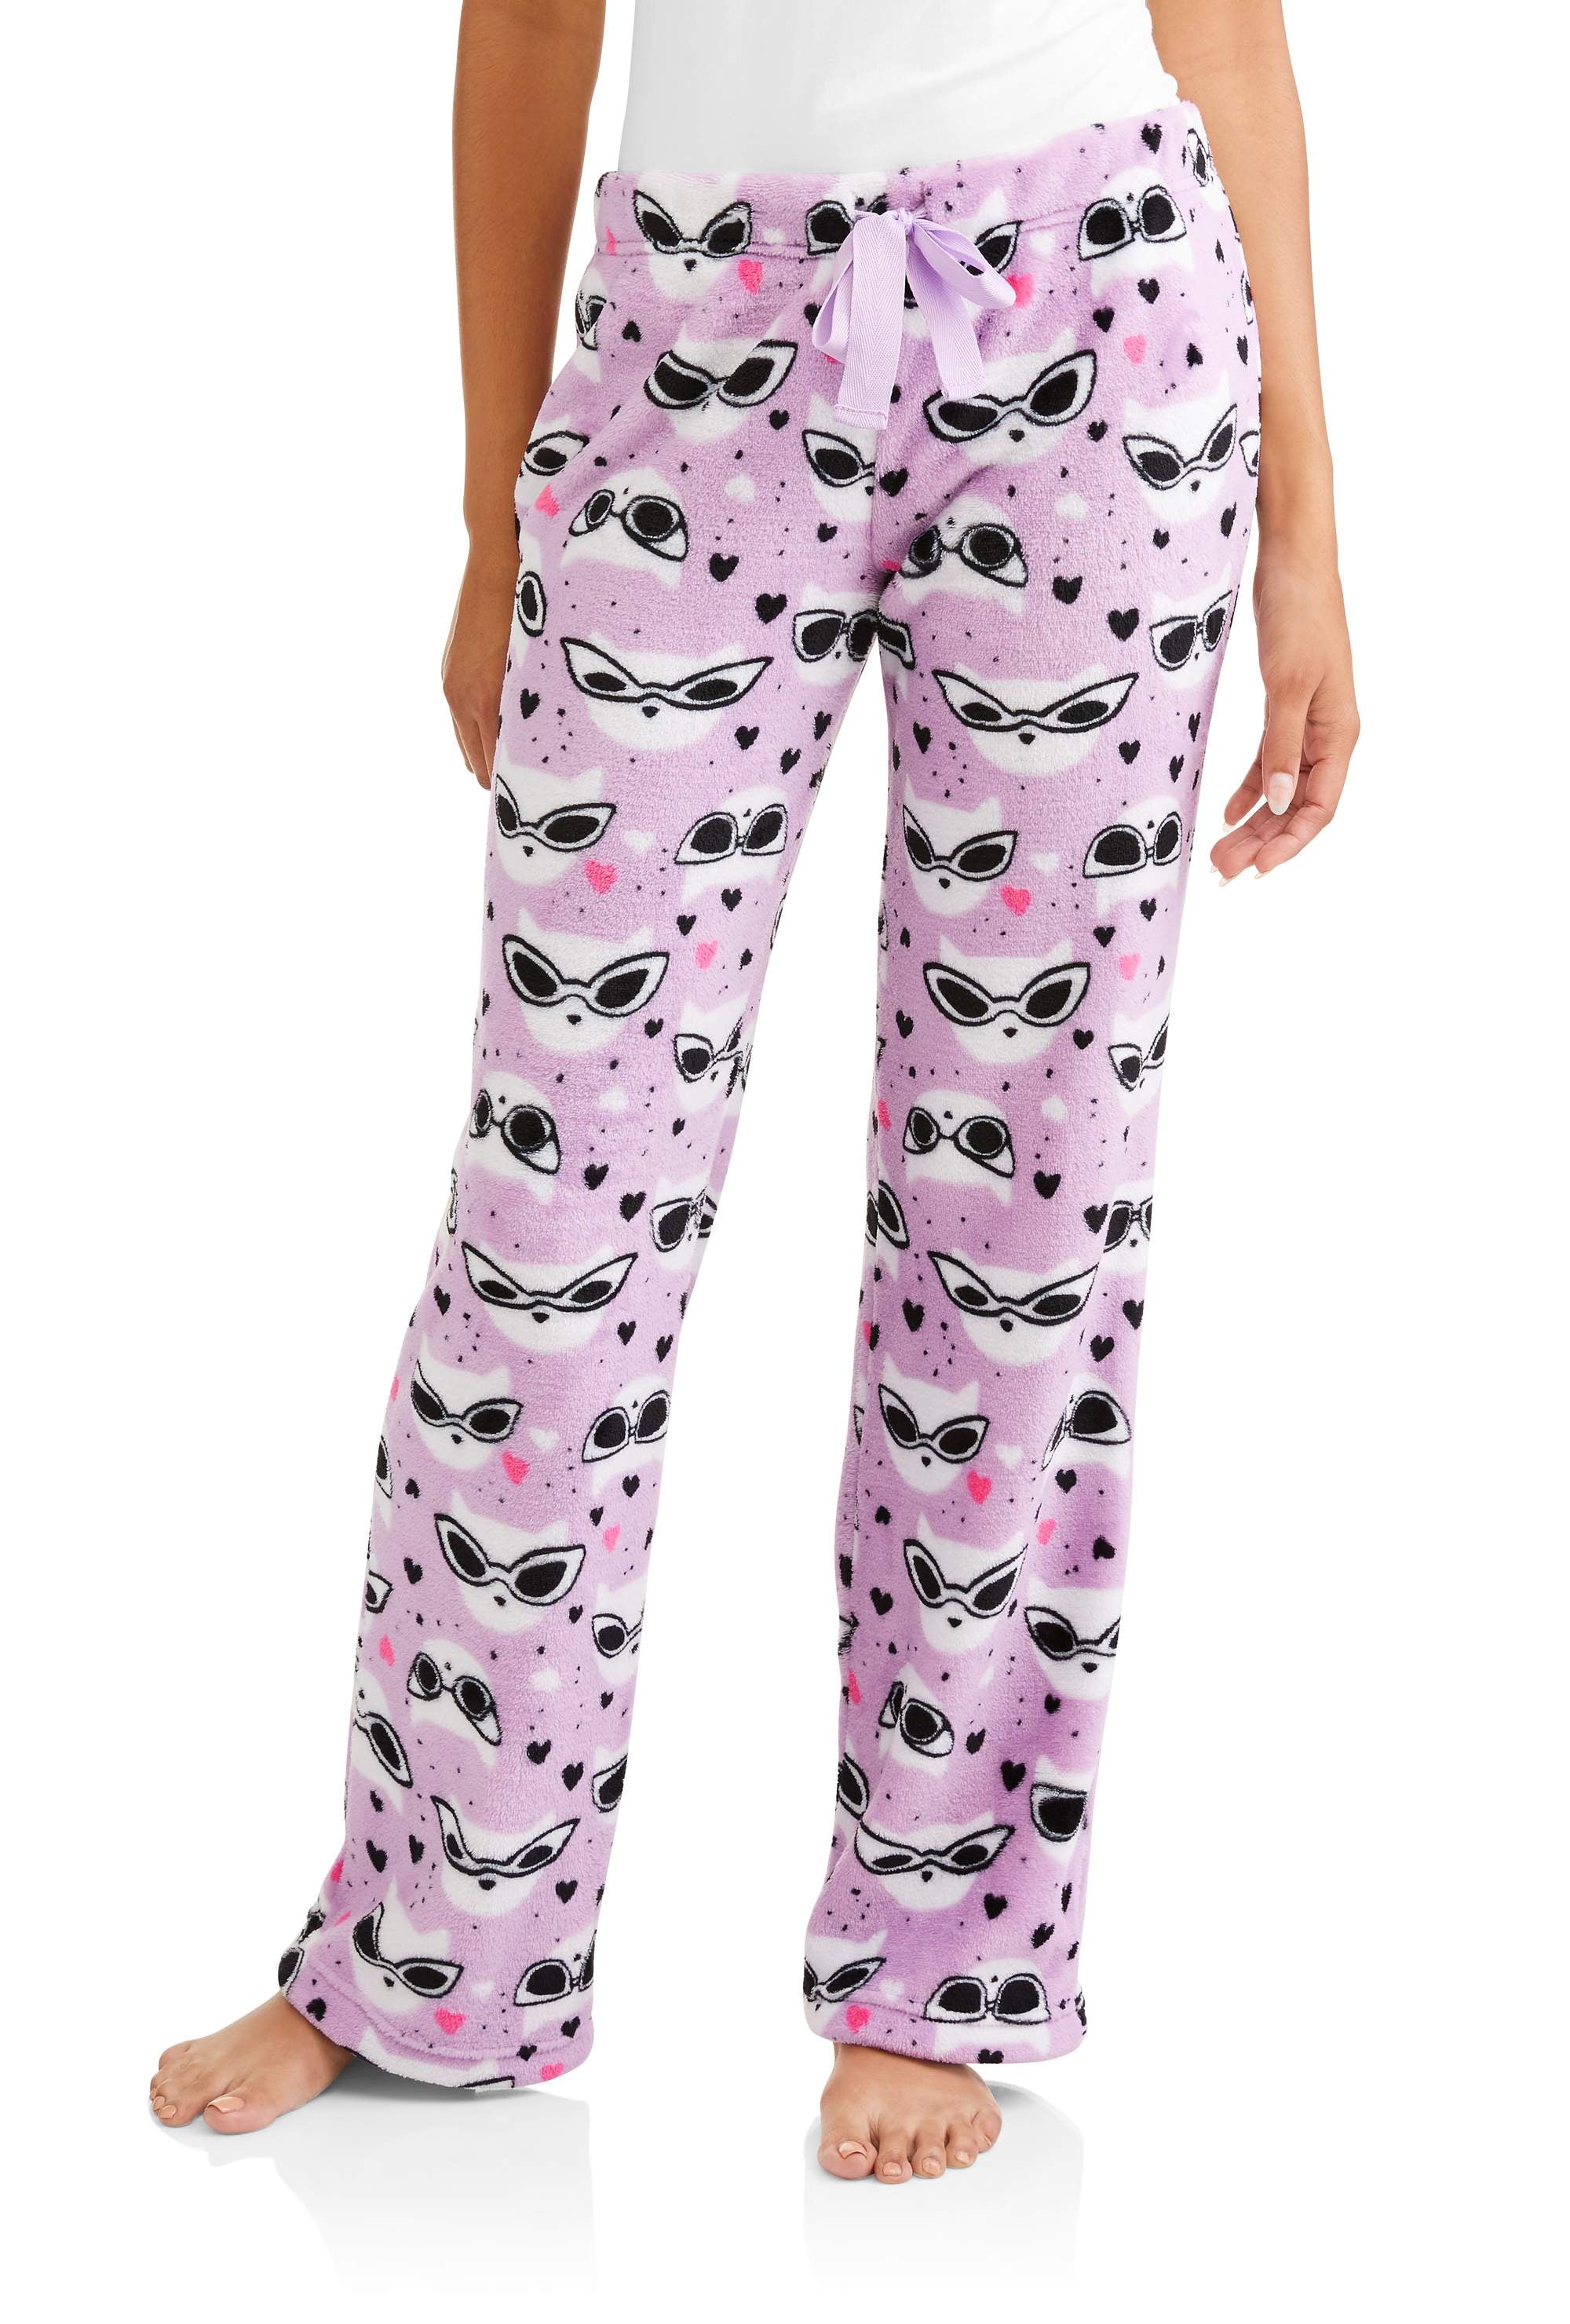 Body Candy Luxe Plush Sleep Pant - Walmart.com